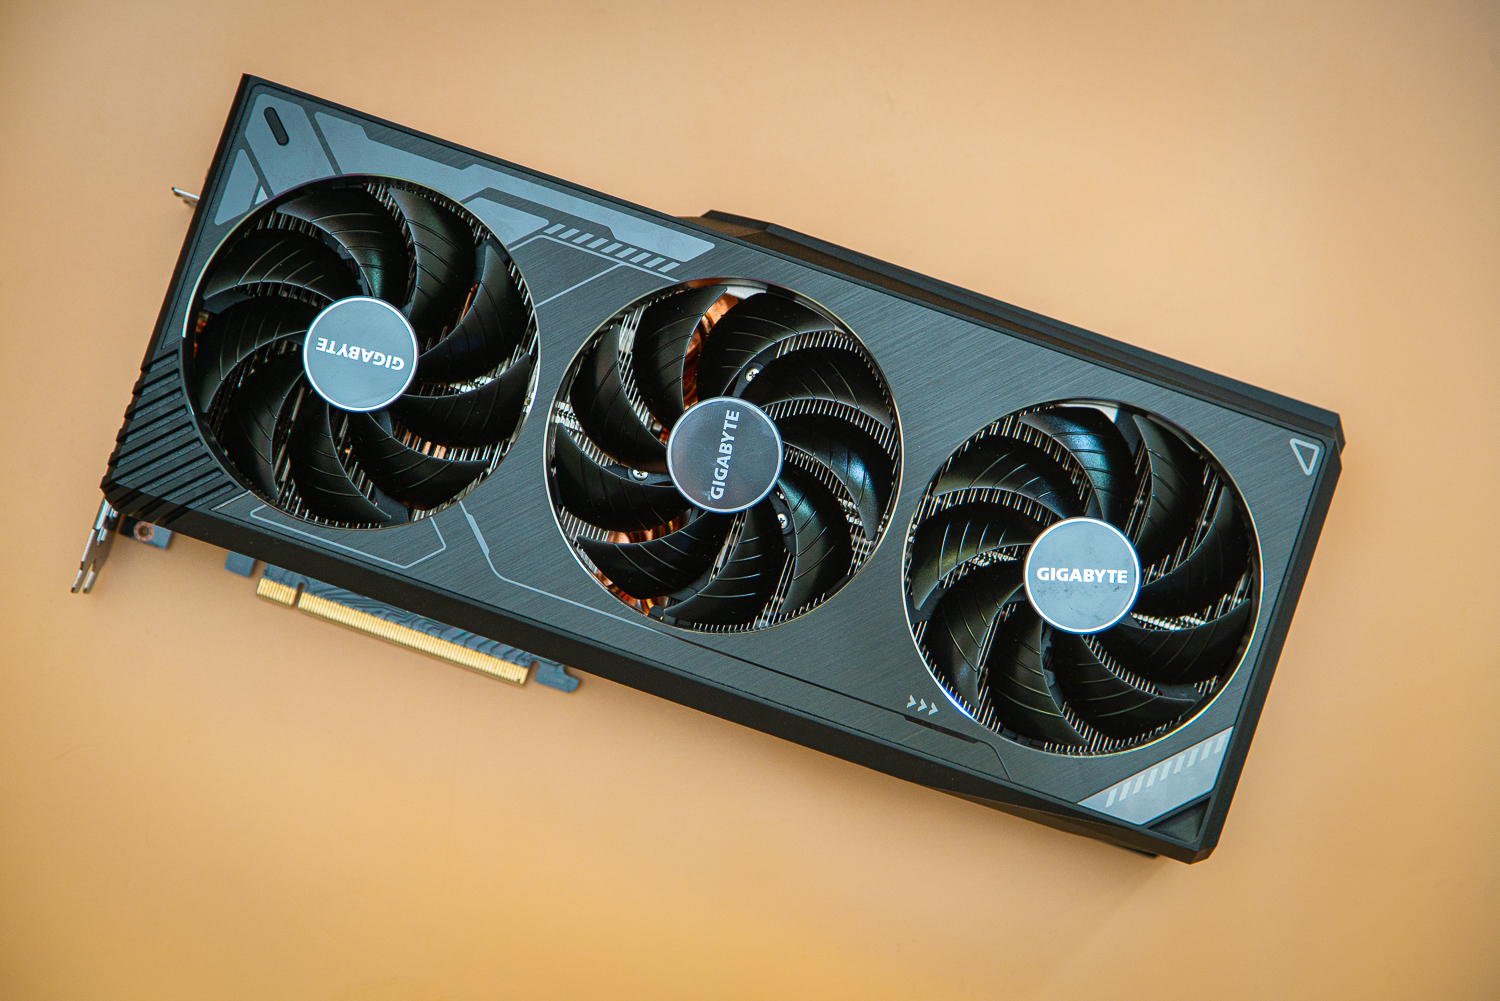 GALAX unveils single-slot GeForce RTX 4060 Ti MAX GPU with 16GB 